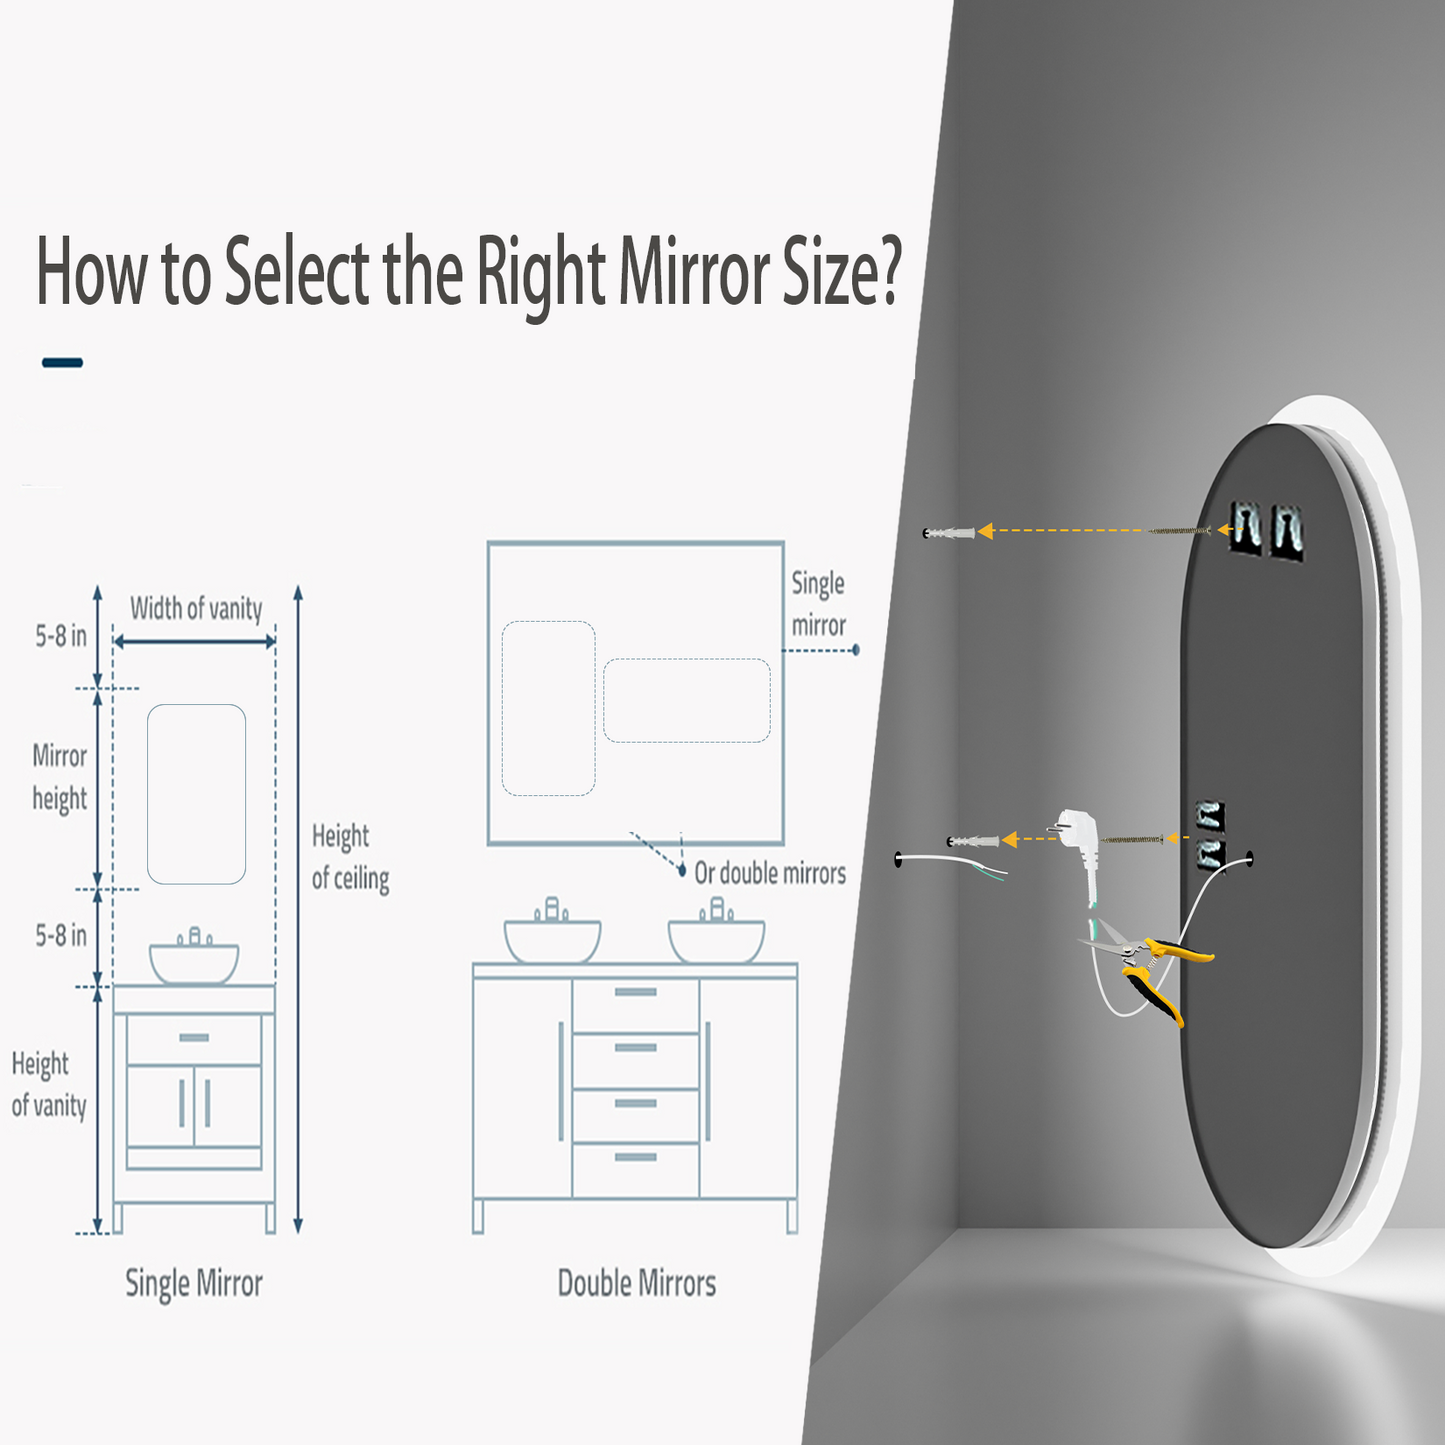 Oval LED Bathroom Mirror with Backlit